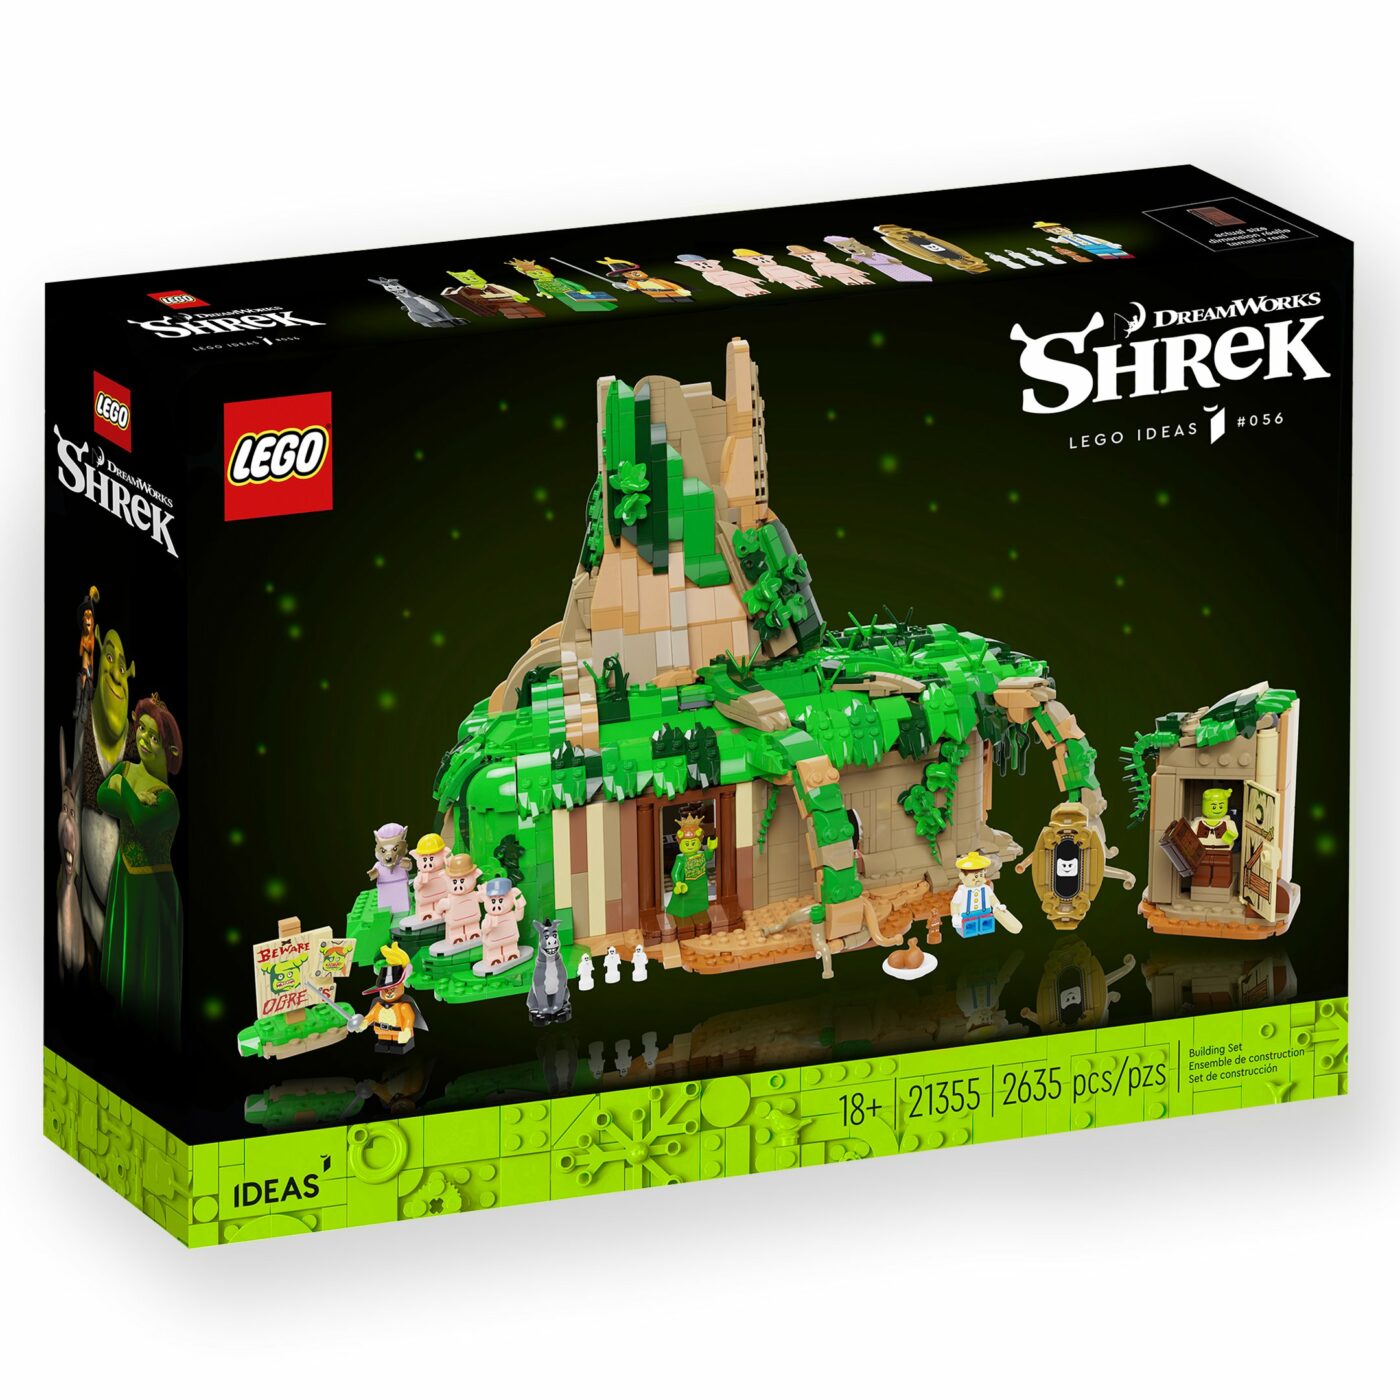 Shrek set crosses 10,000 and could become a future LEGO set! - Jay's Brick Blog